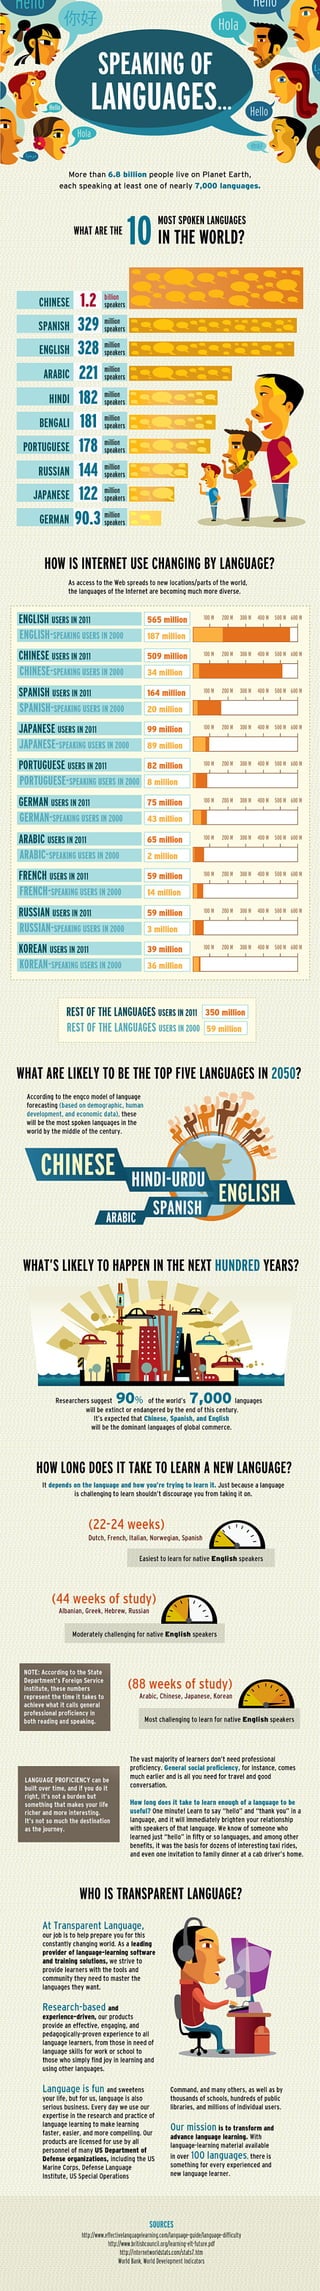 Infographic: Speaking of Languages